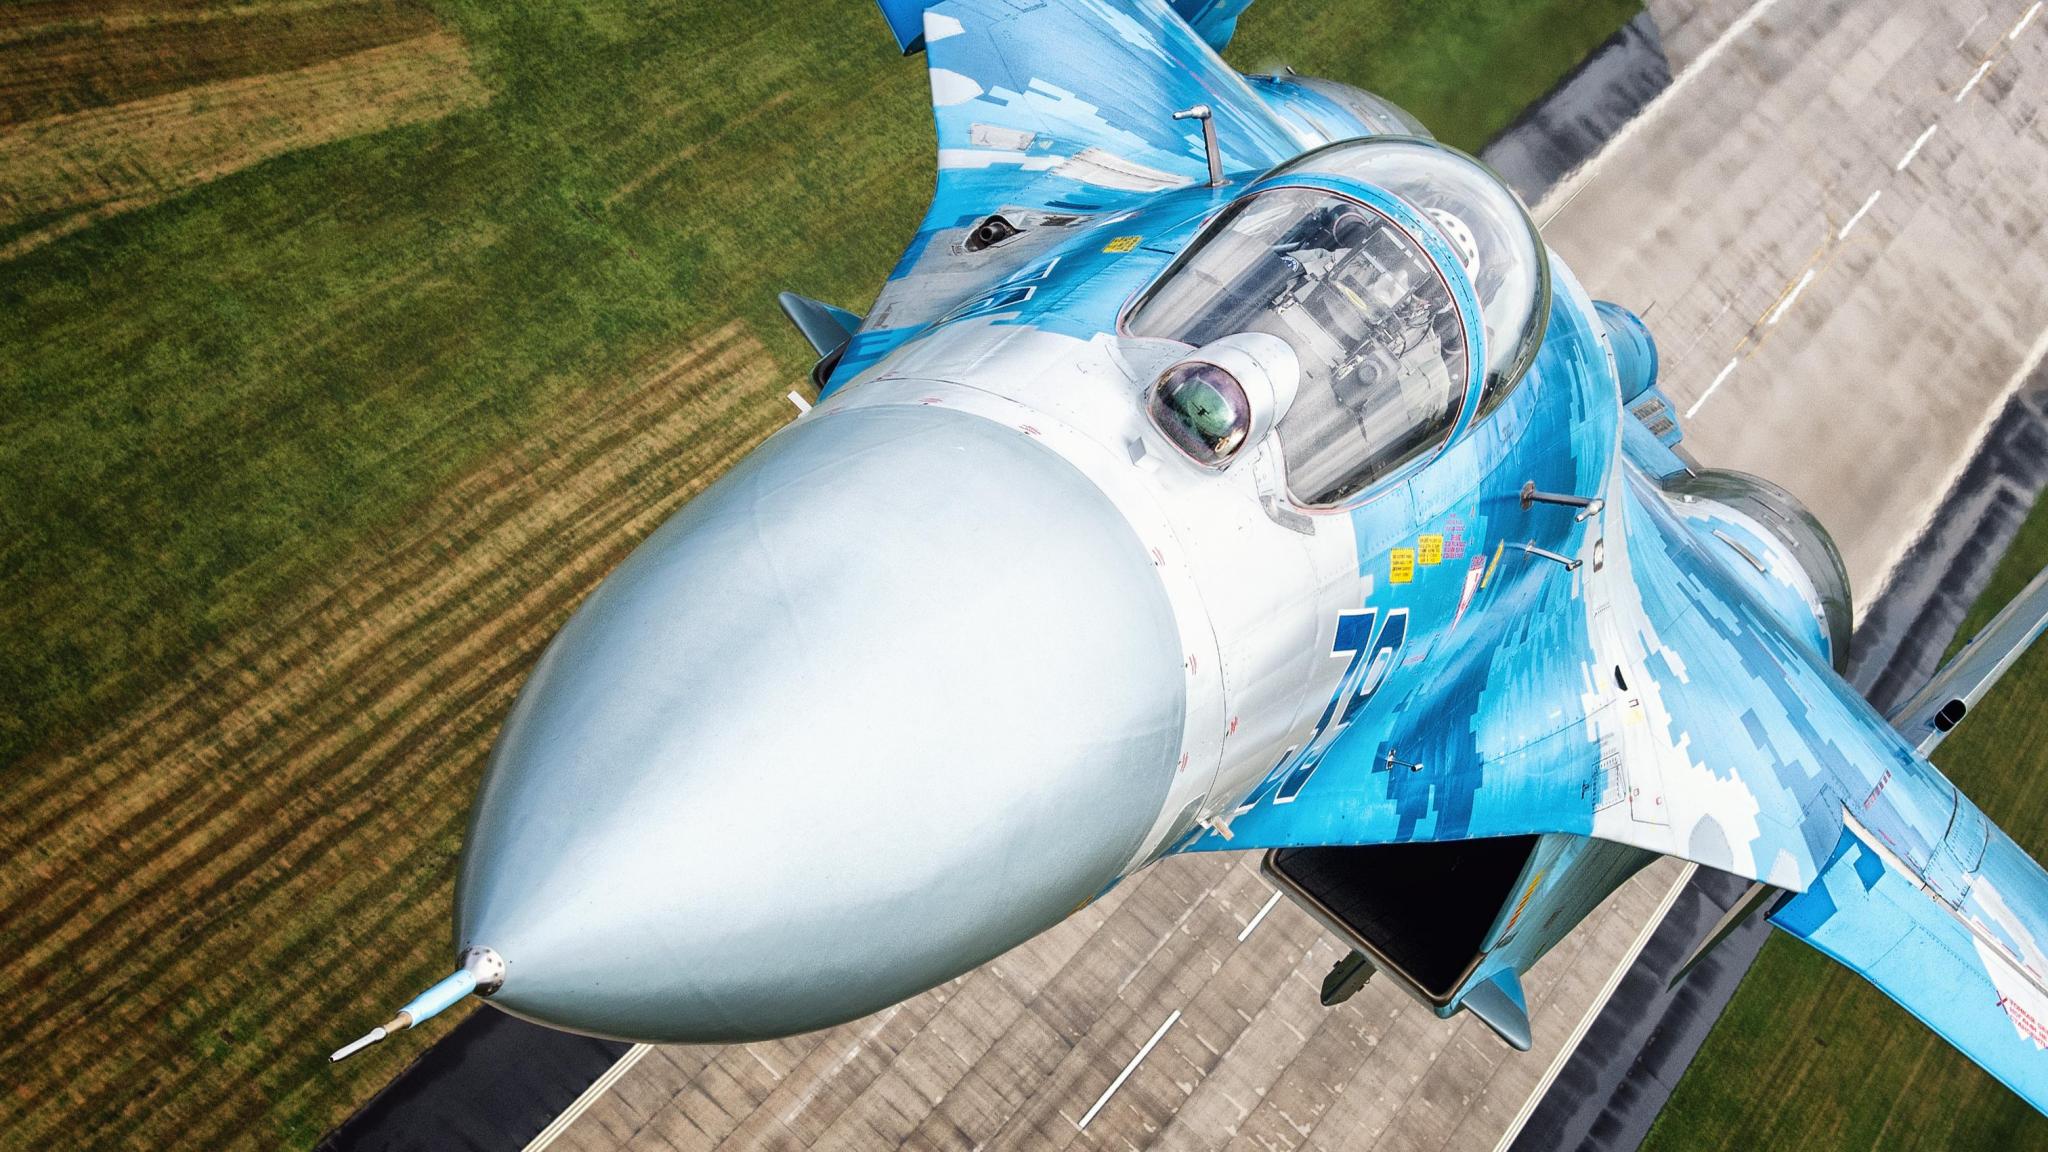 Air-to-Air Photo Shoot with Ukrainian Su-27